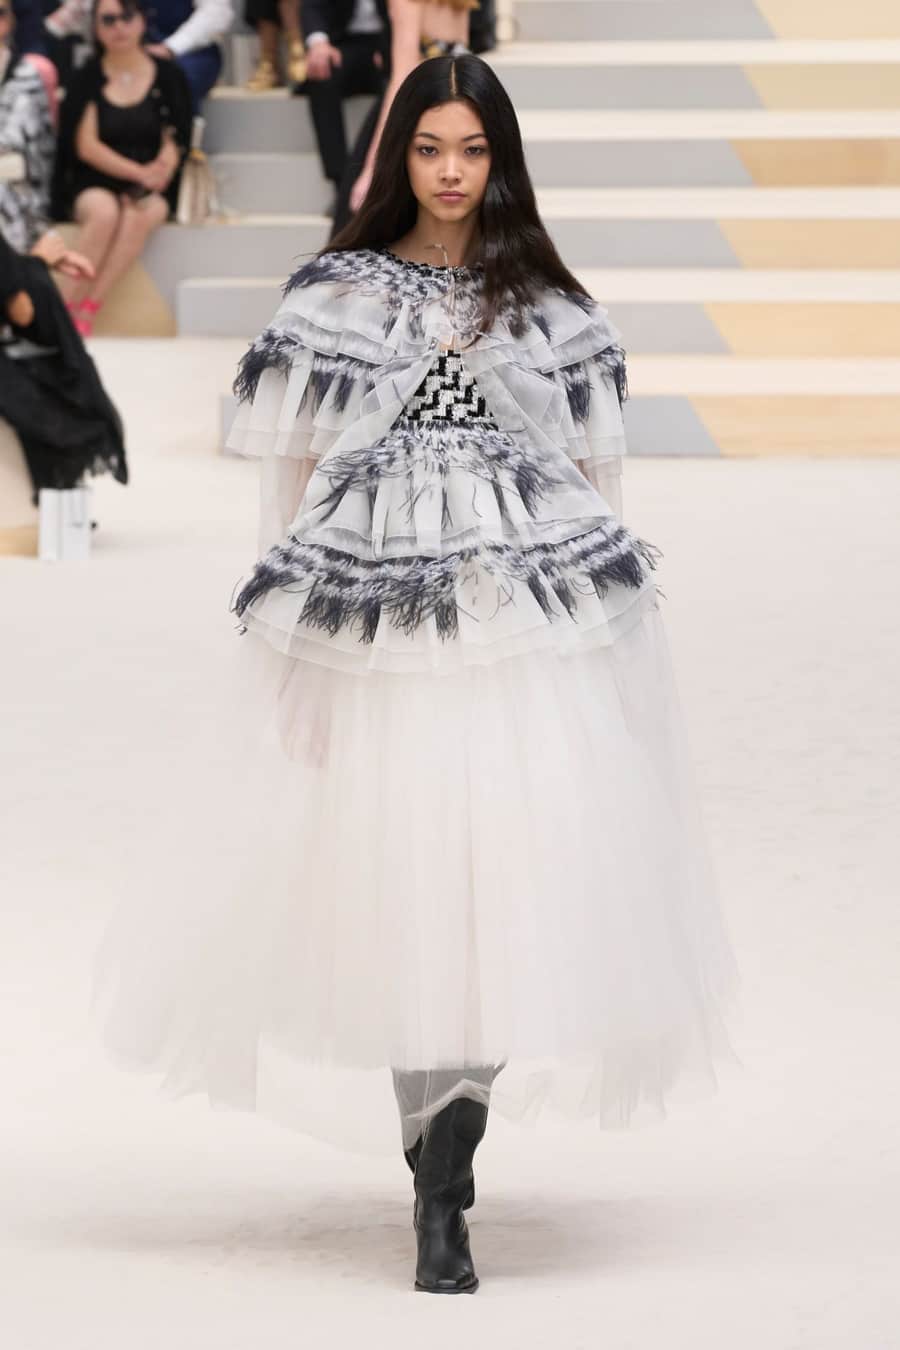 Chanel model sports a black and white dress for Paris Fashion Week 2022.